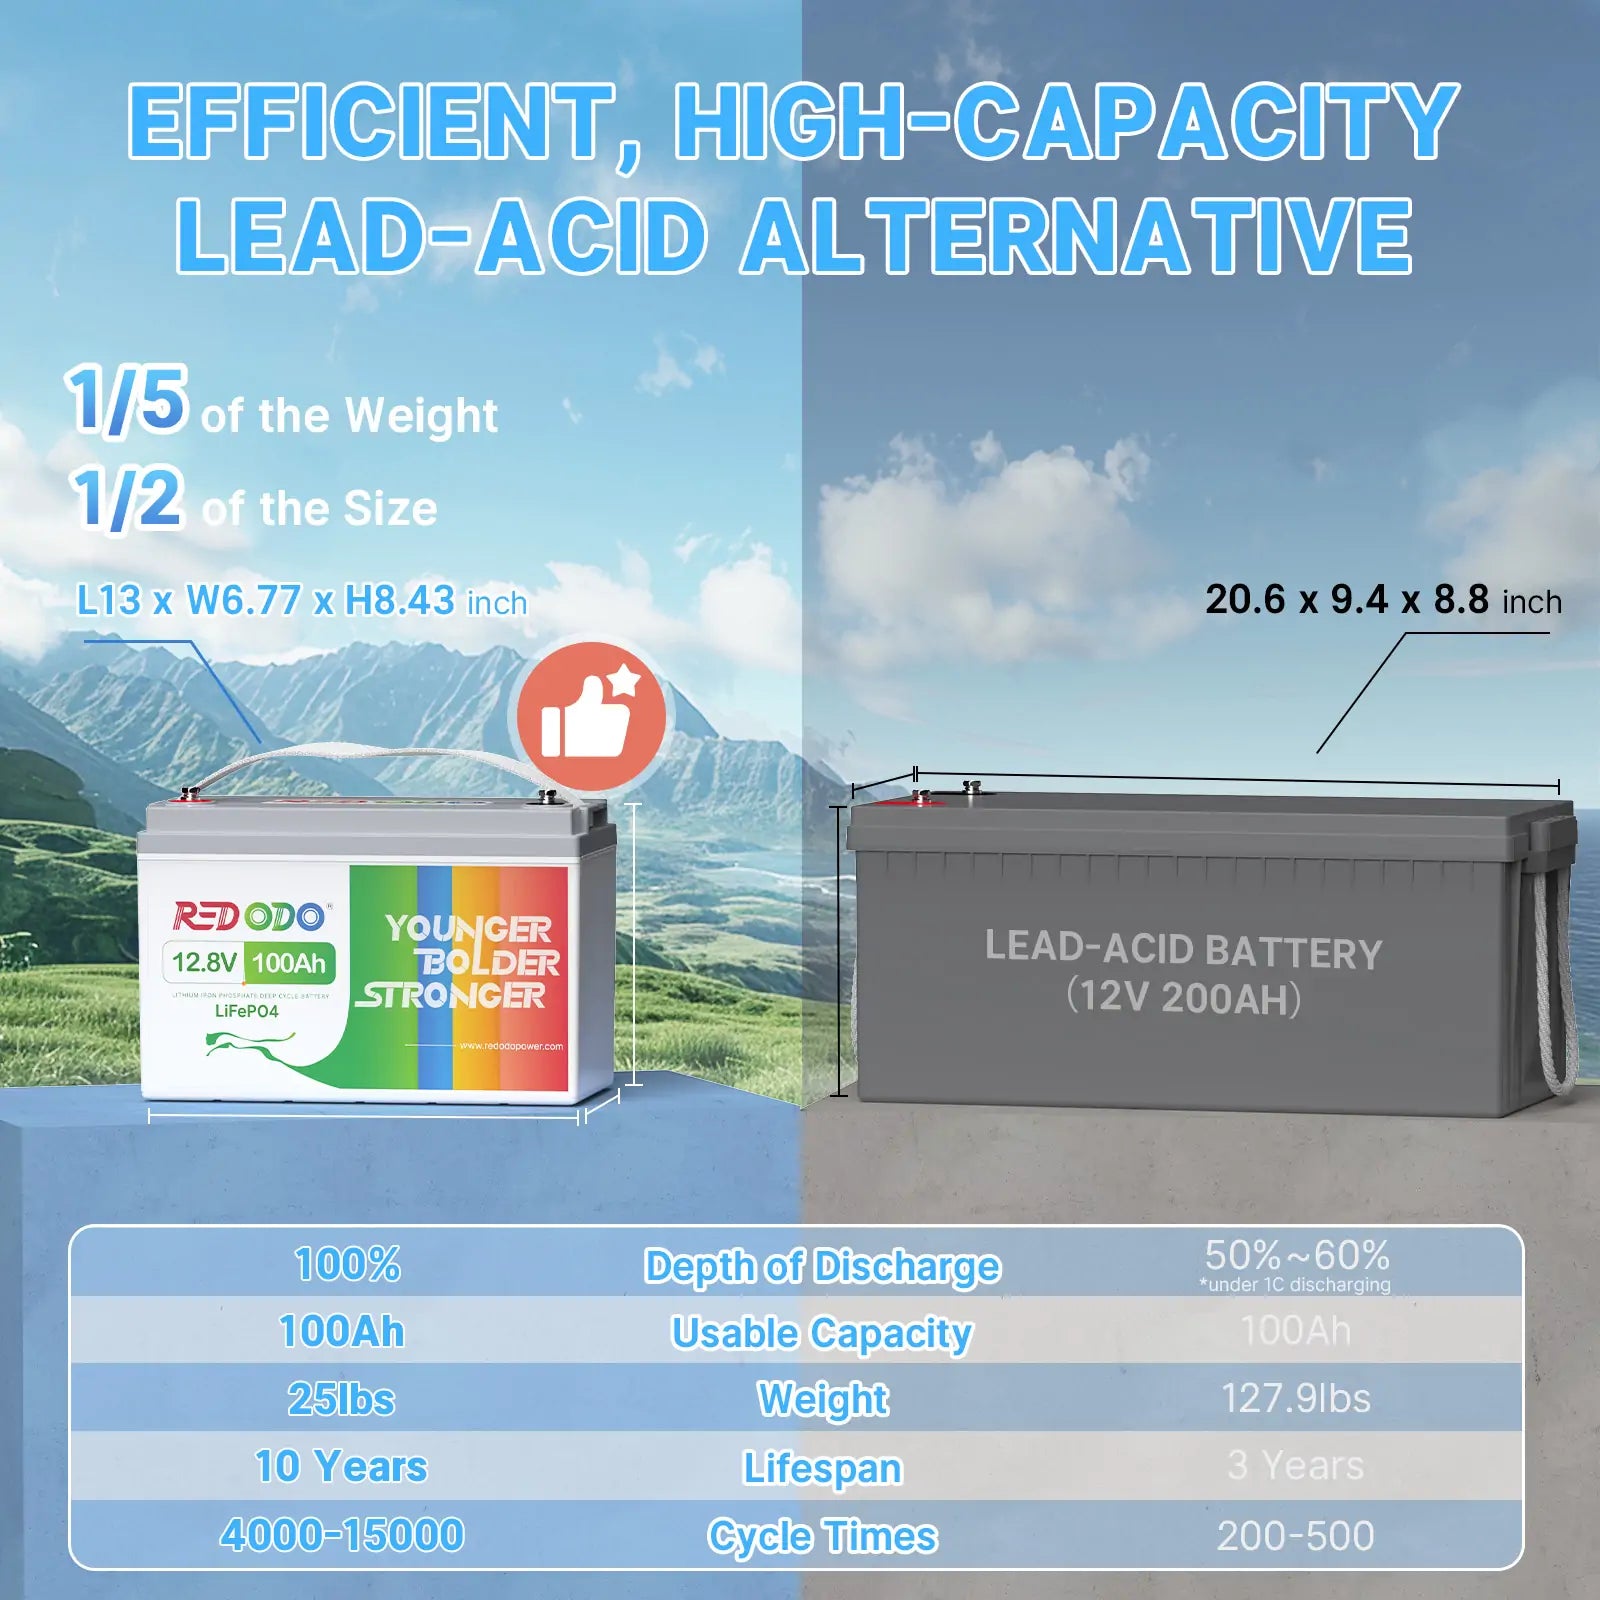 Redodo 12V 100Ah Lithium Battery vs 12V 200Ah Lead-acid battery